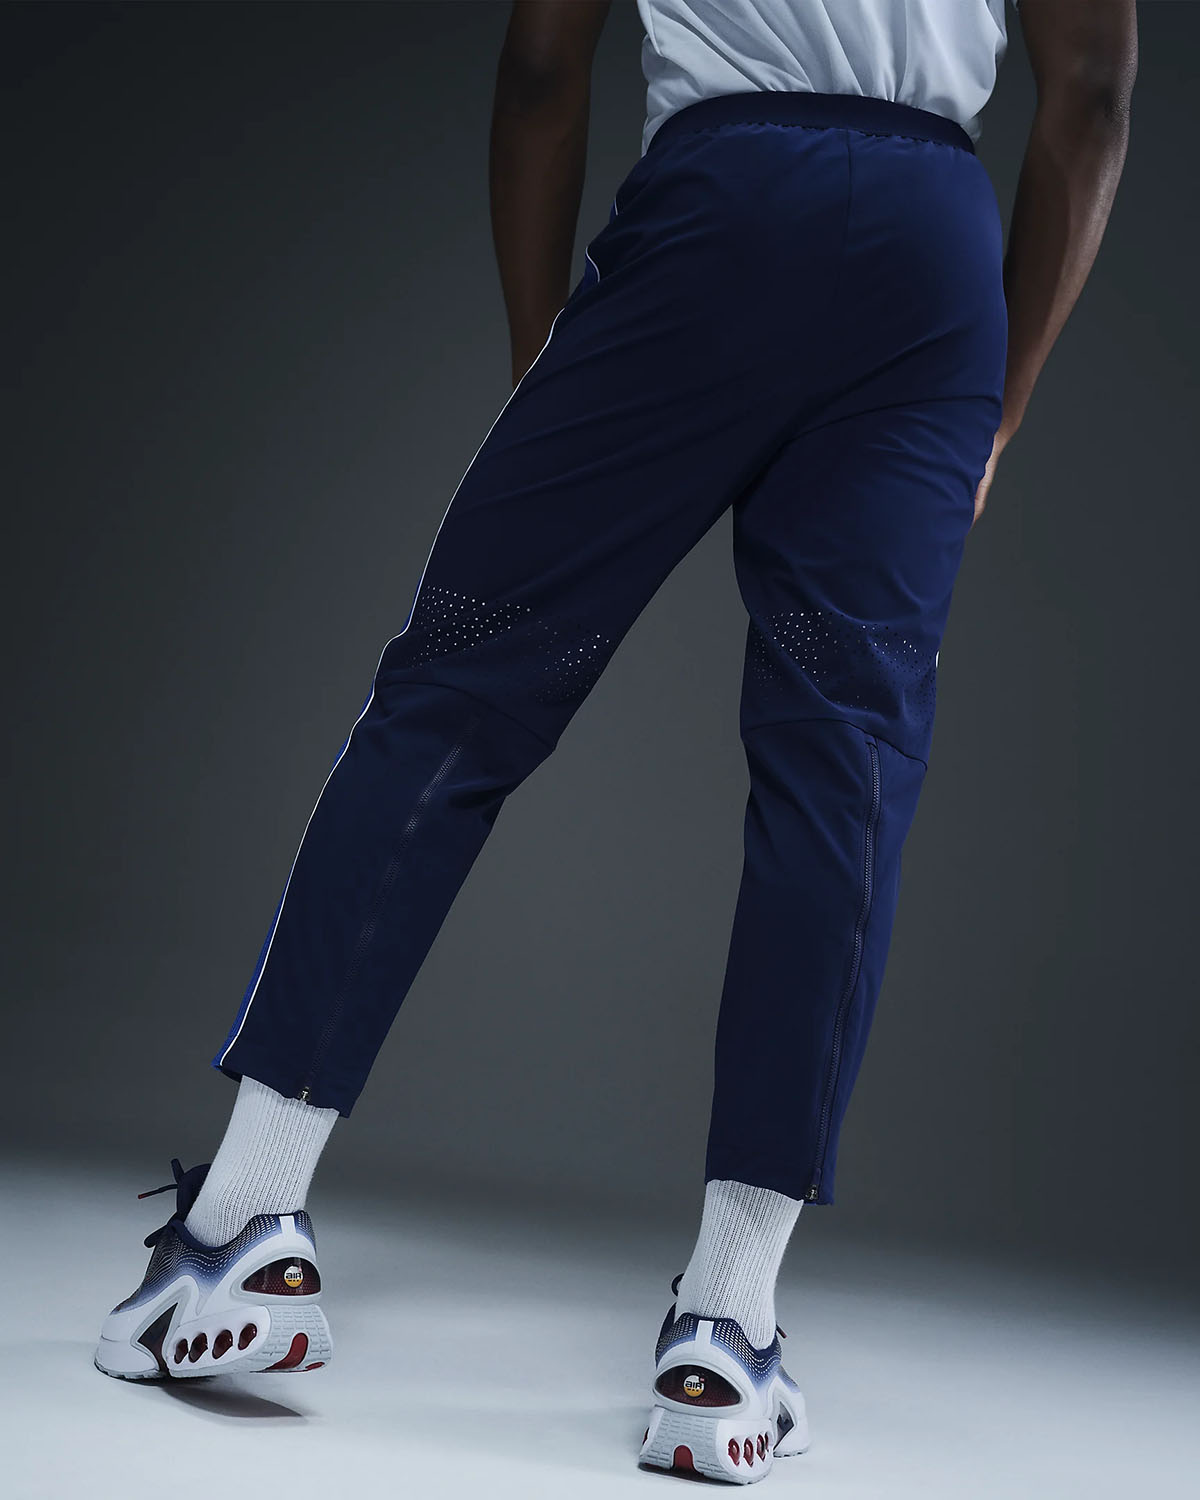 Nike Team USA Olympic Podium Pants 3